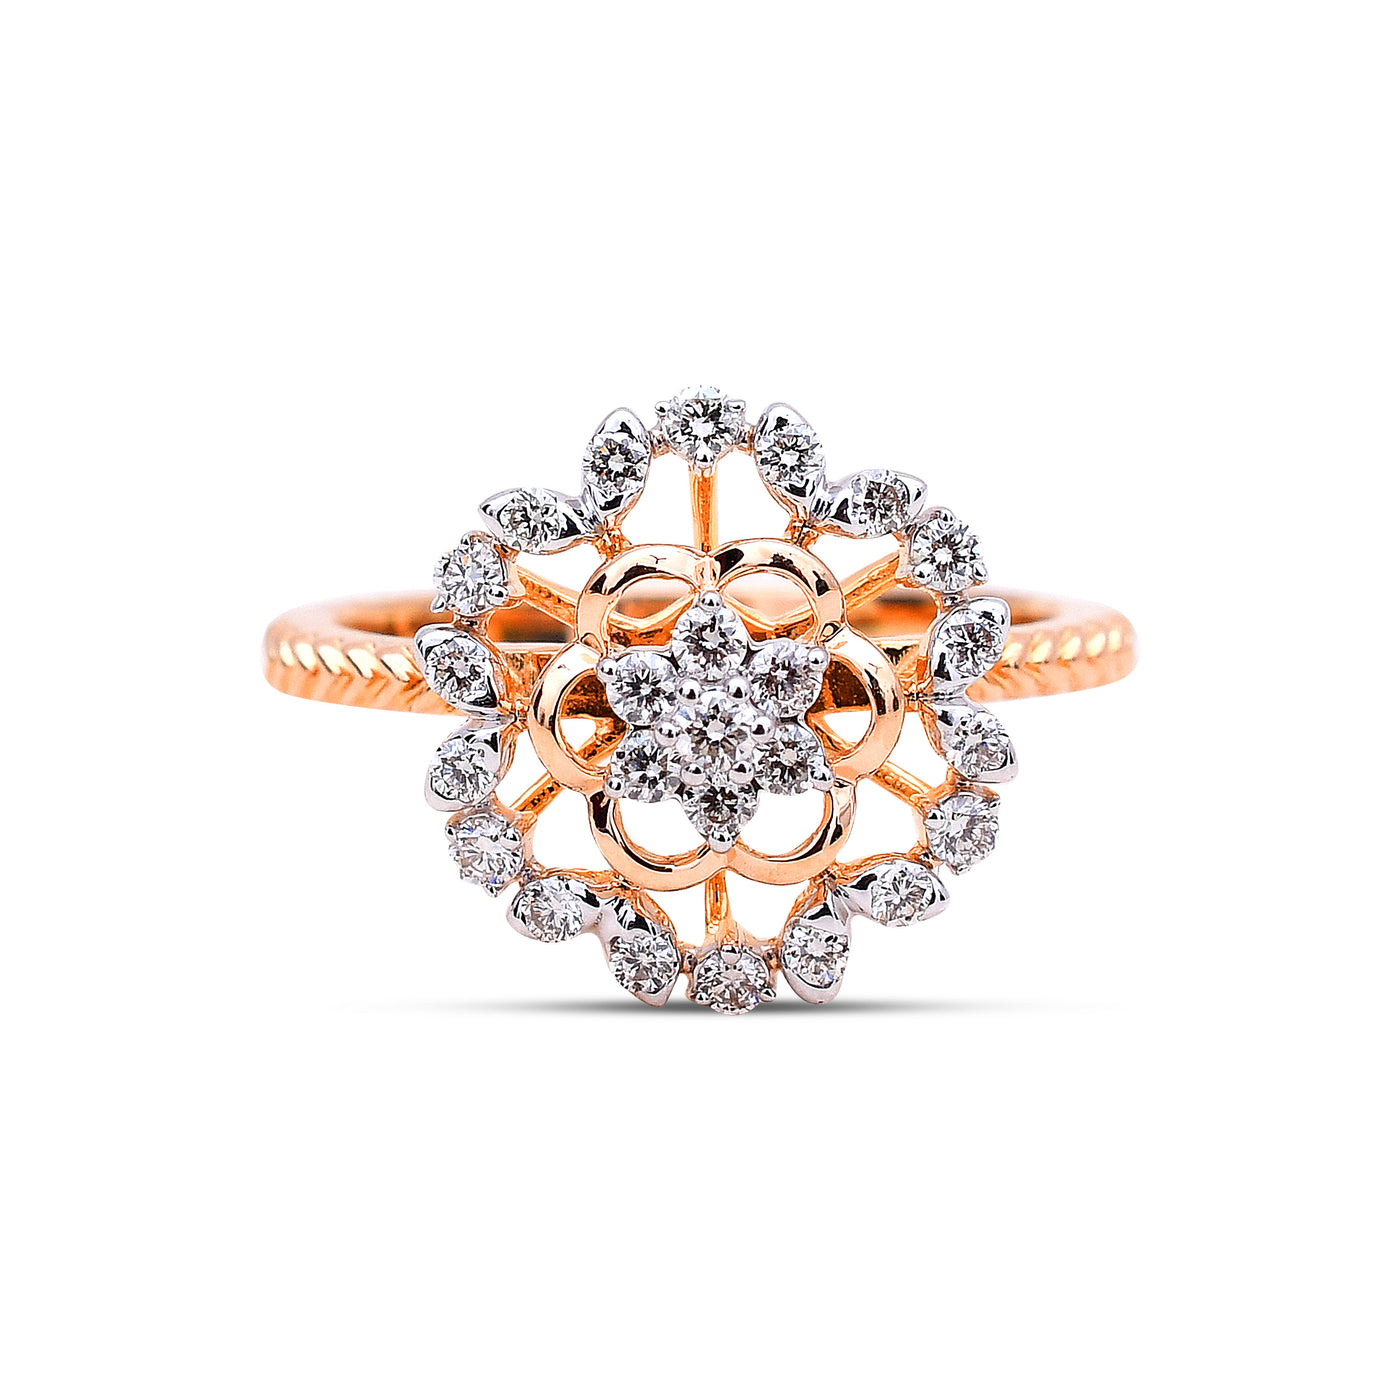 The Fleur Desire Diamond Ring